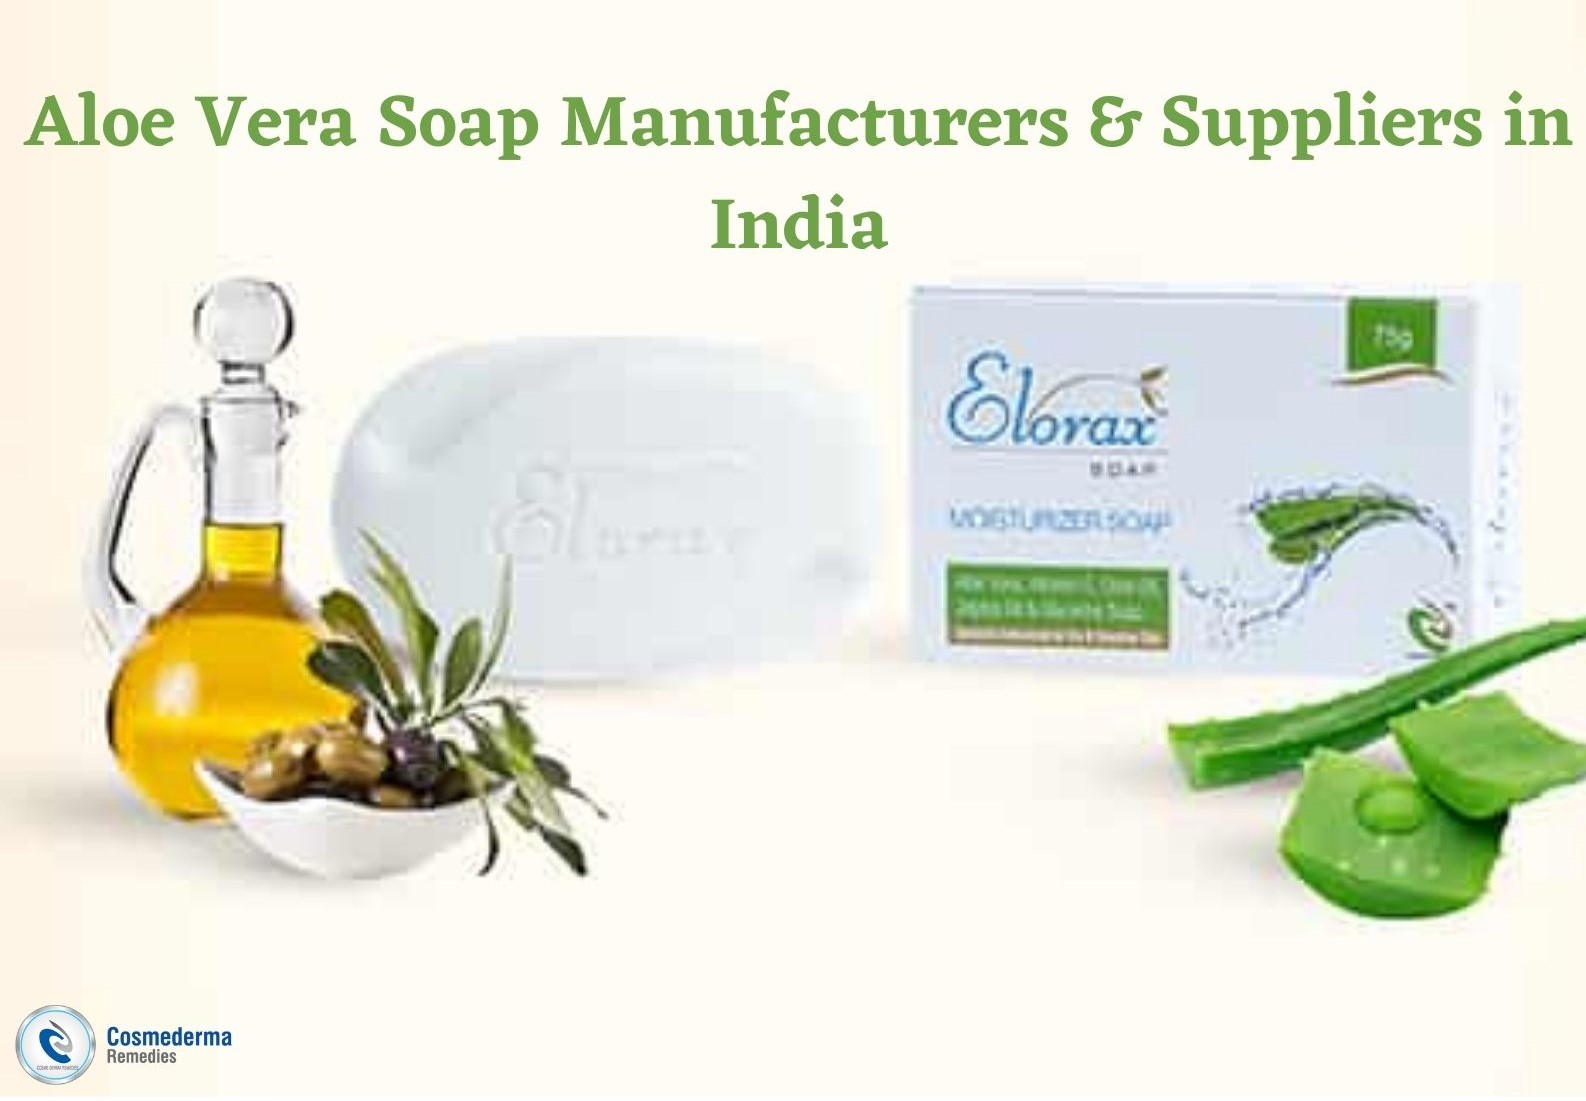 Aloe Vera Soap Manufacturers & Suppliers in India